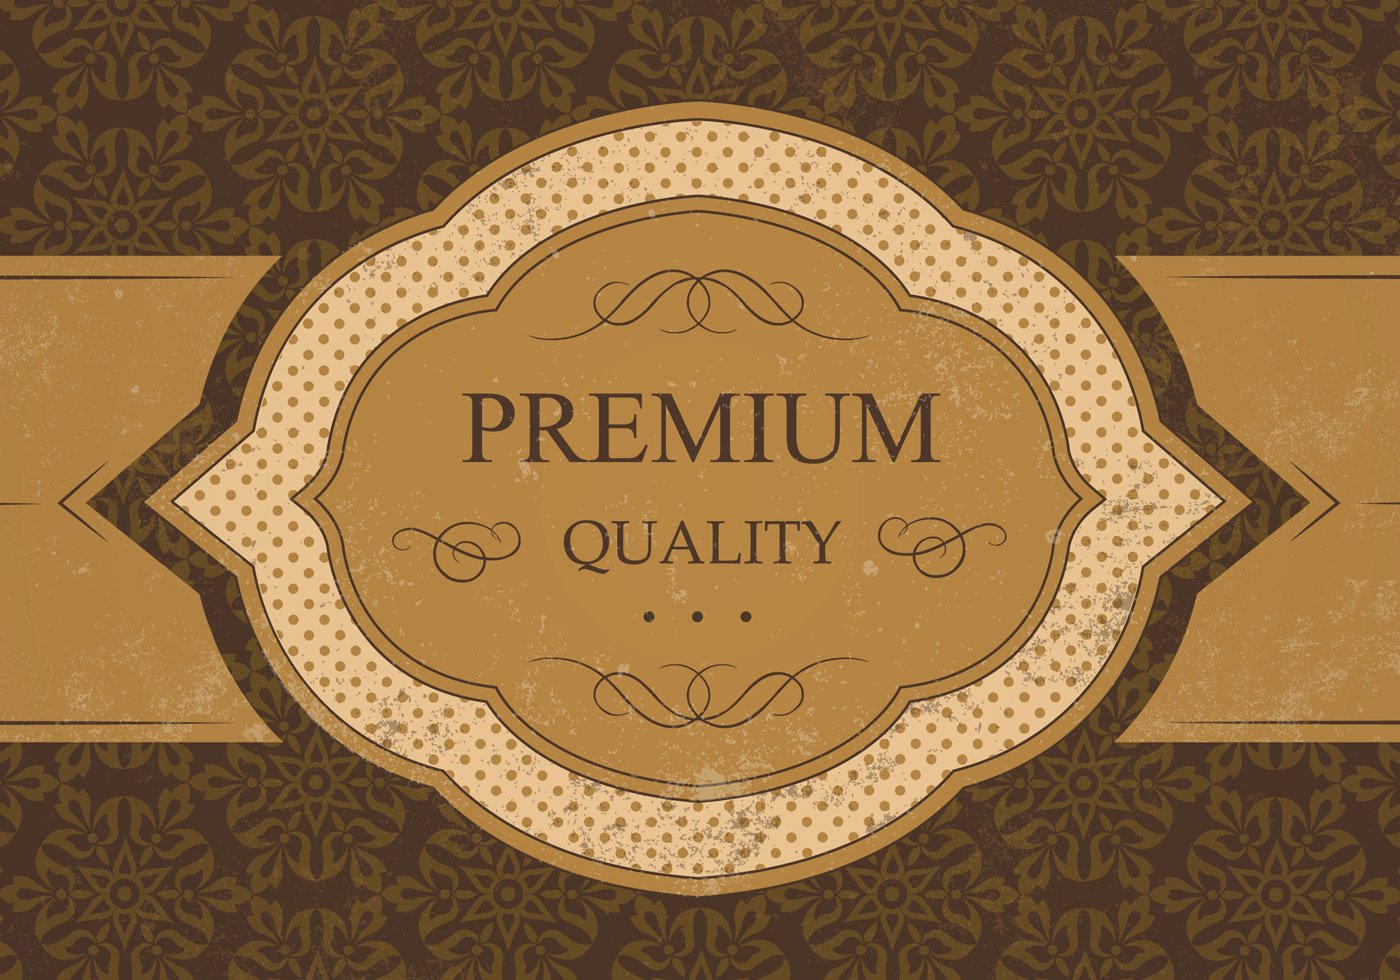  Vintage  Premium Quality Vector  Background 81643 Vector  Art 